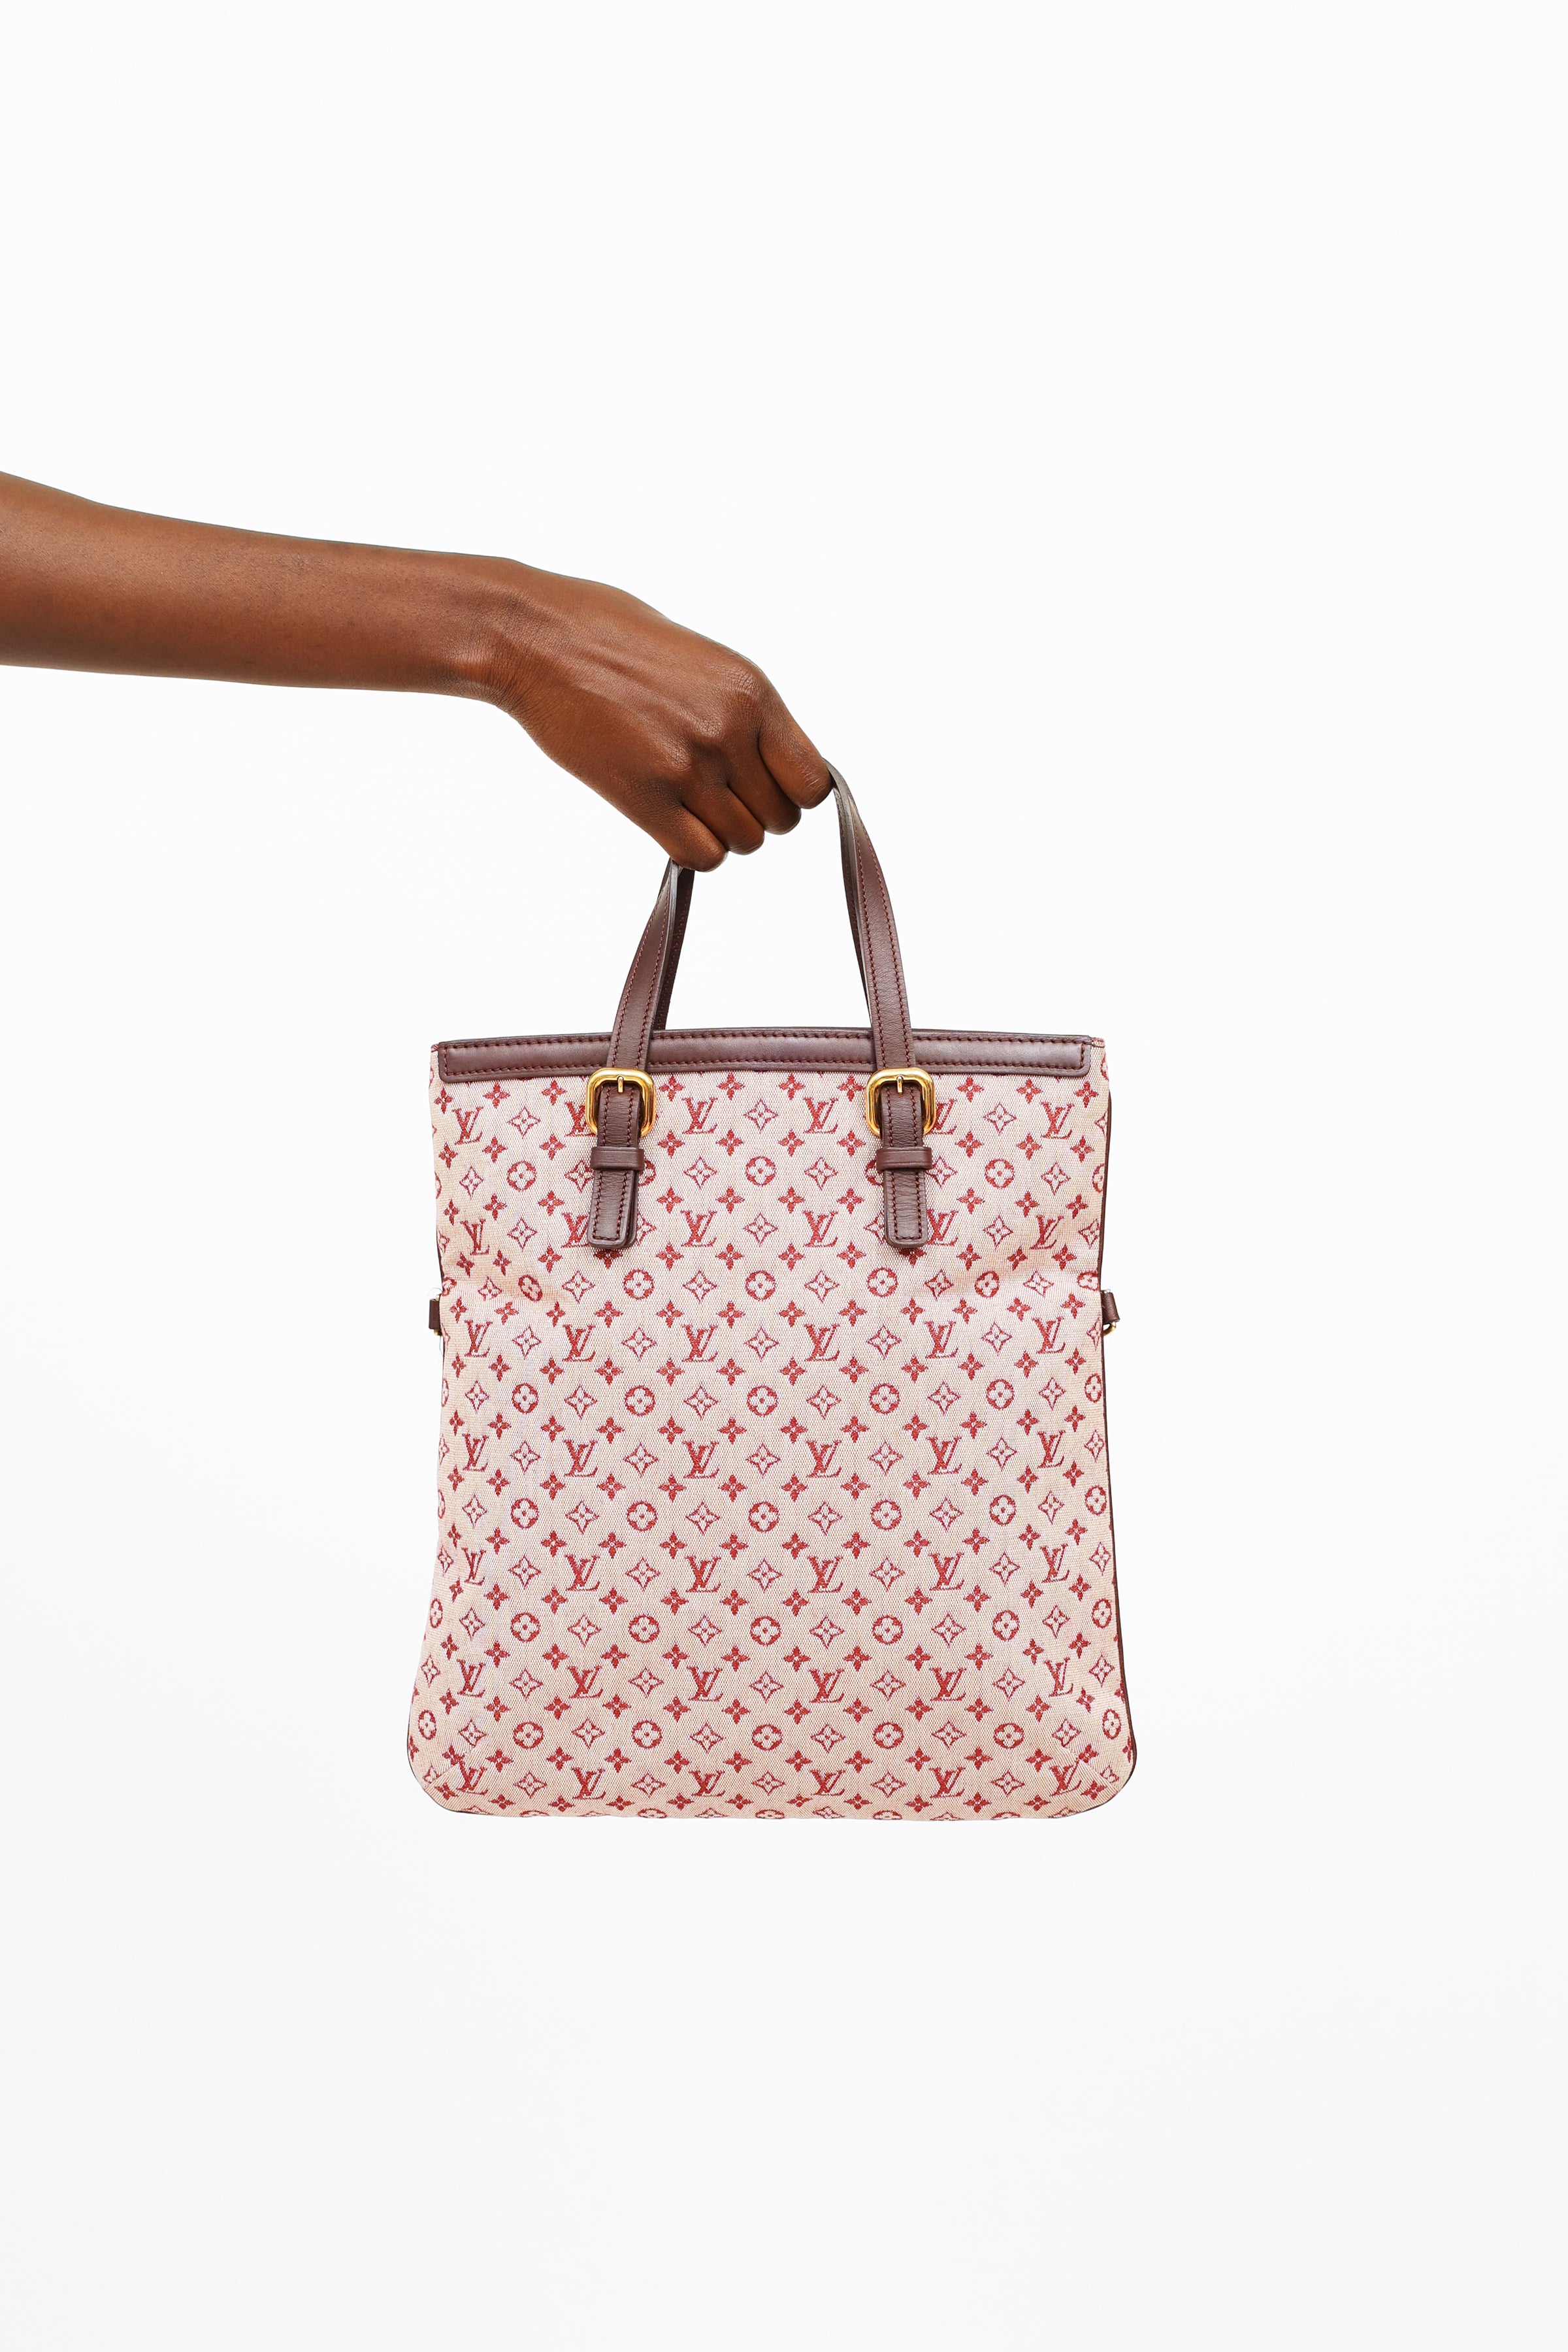 Louis Vuitton Monogram Mini Lin Francoise - Red Totes, Handbags